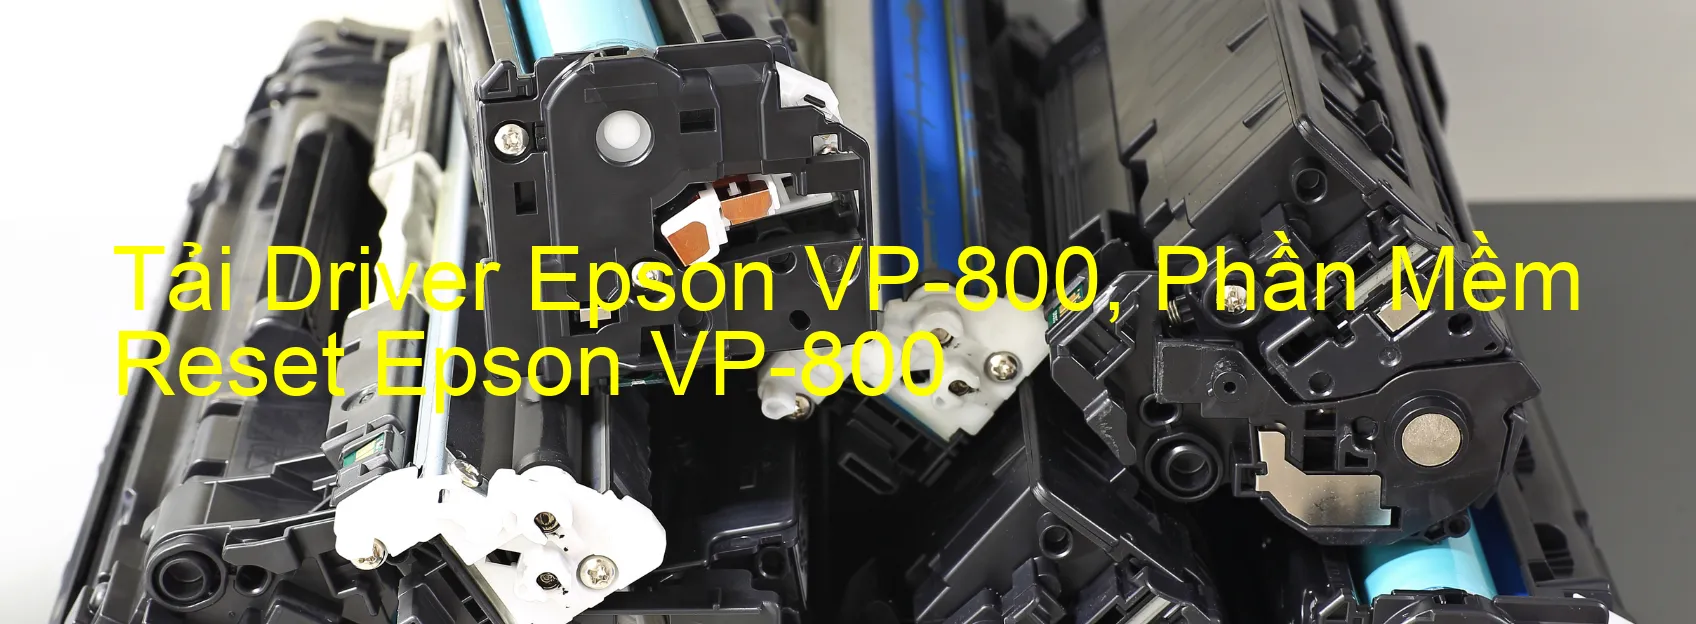 Driver Epson VP-800, Phần Mềm Reset Epson VP-800